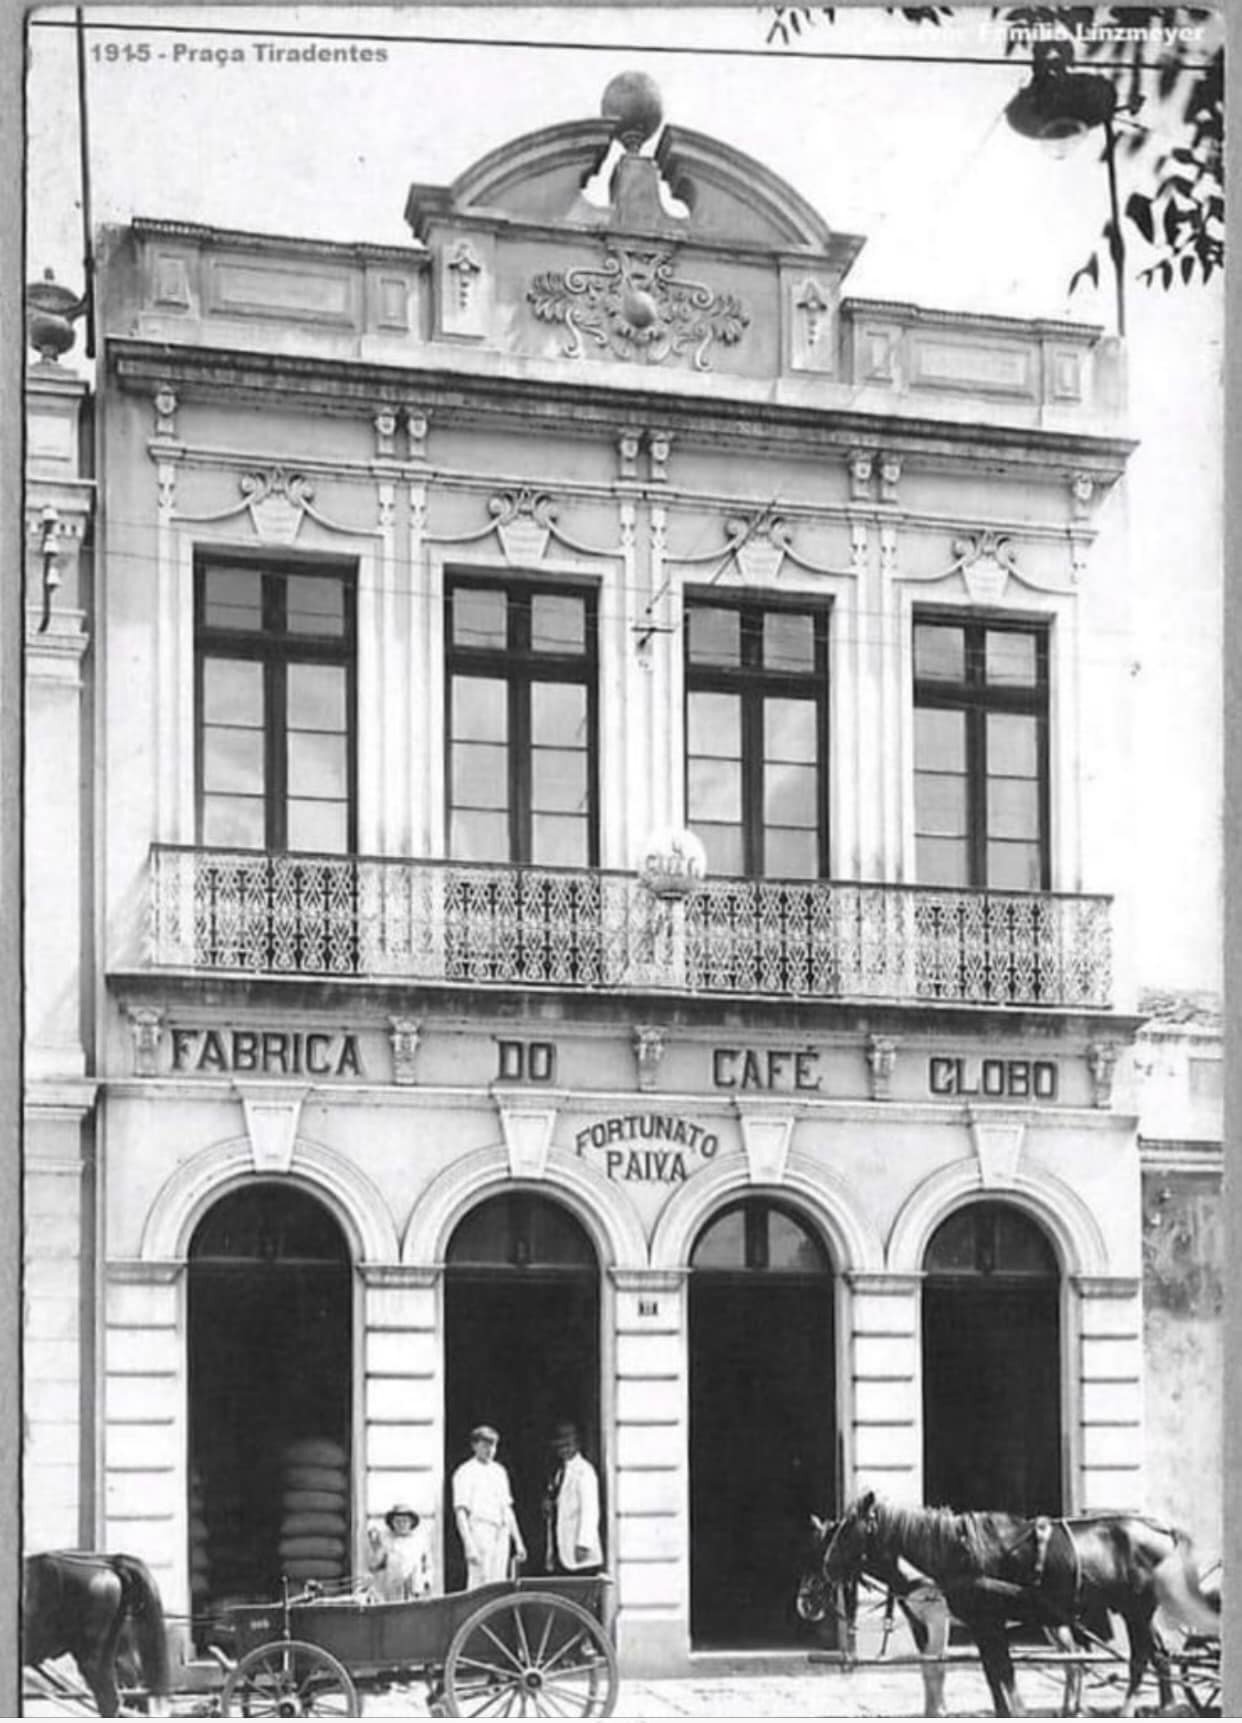 Fábrica do Café Globo - 1915